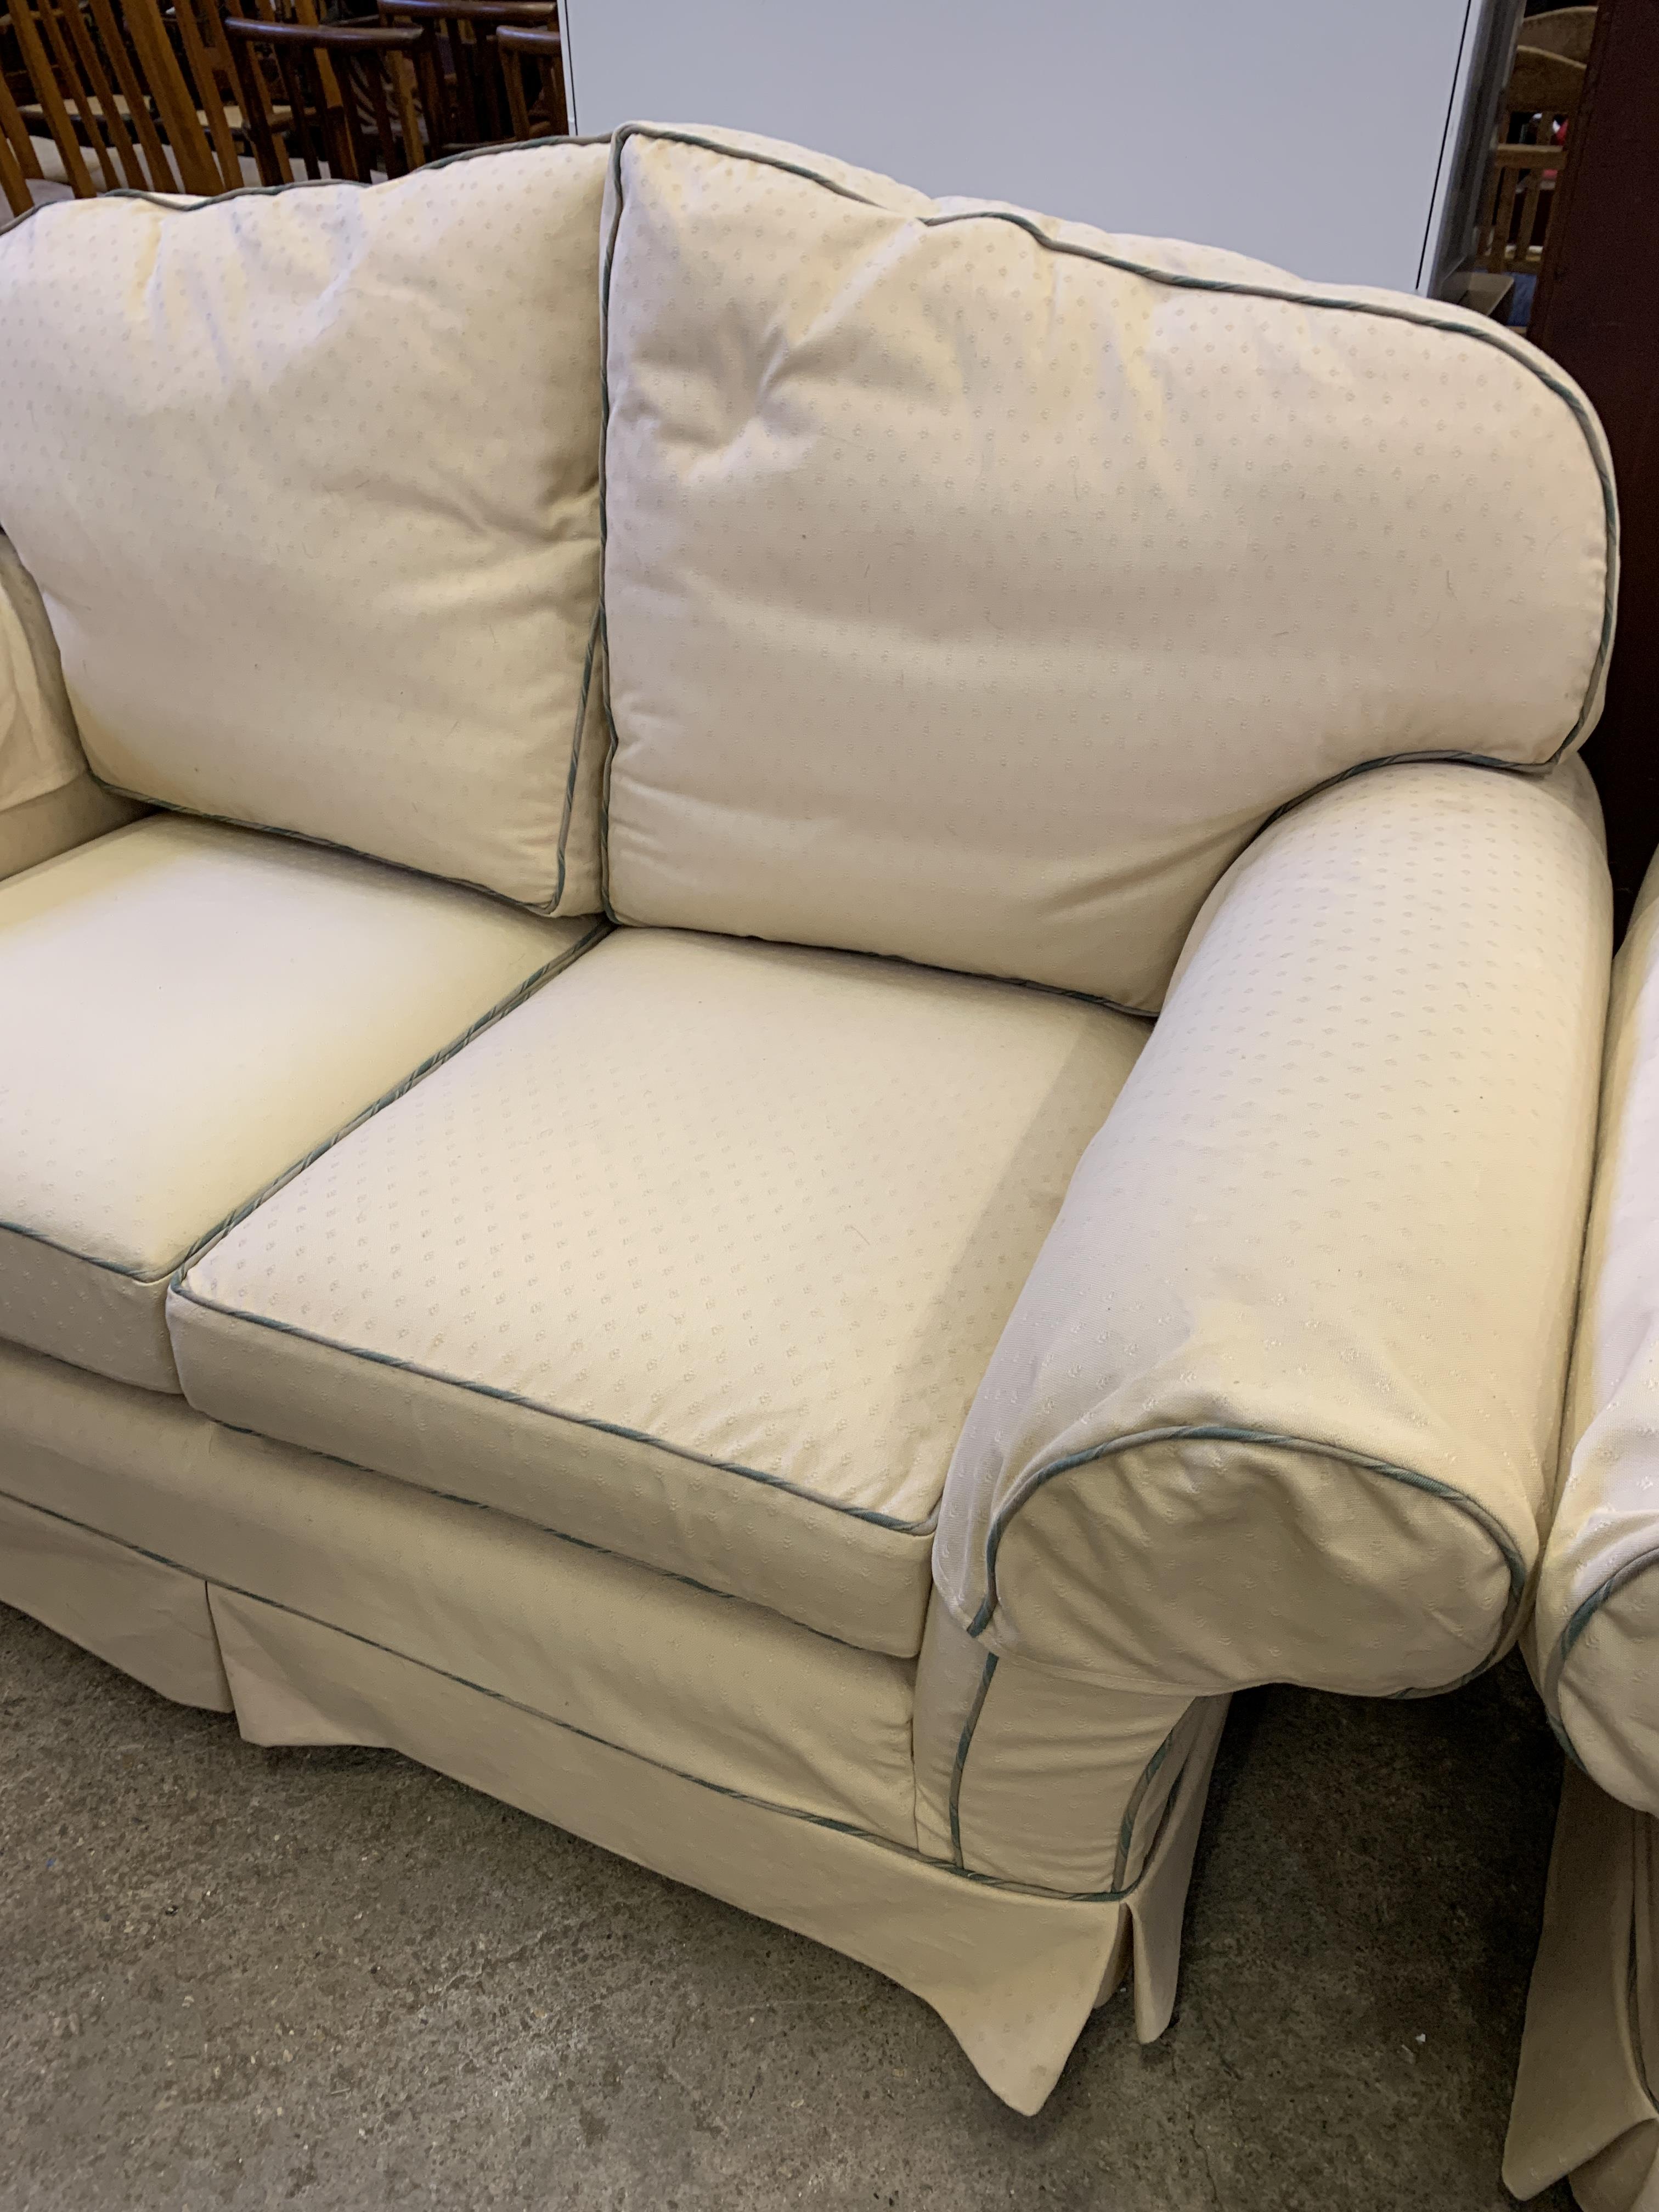 Cream two seat sofa - Image 3 of 4